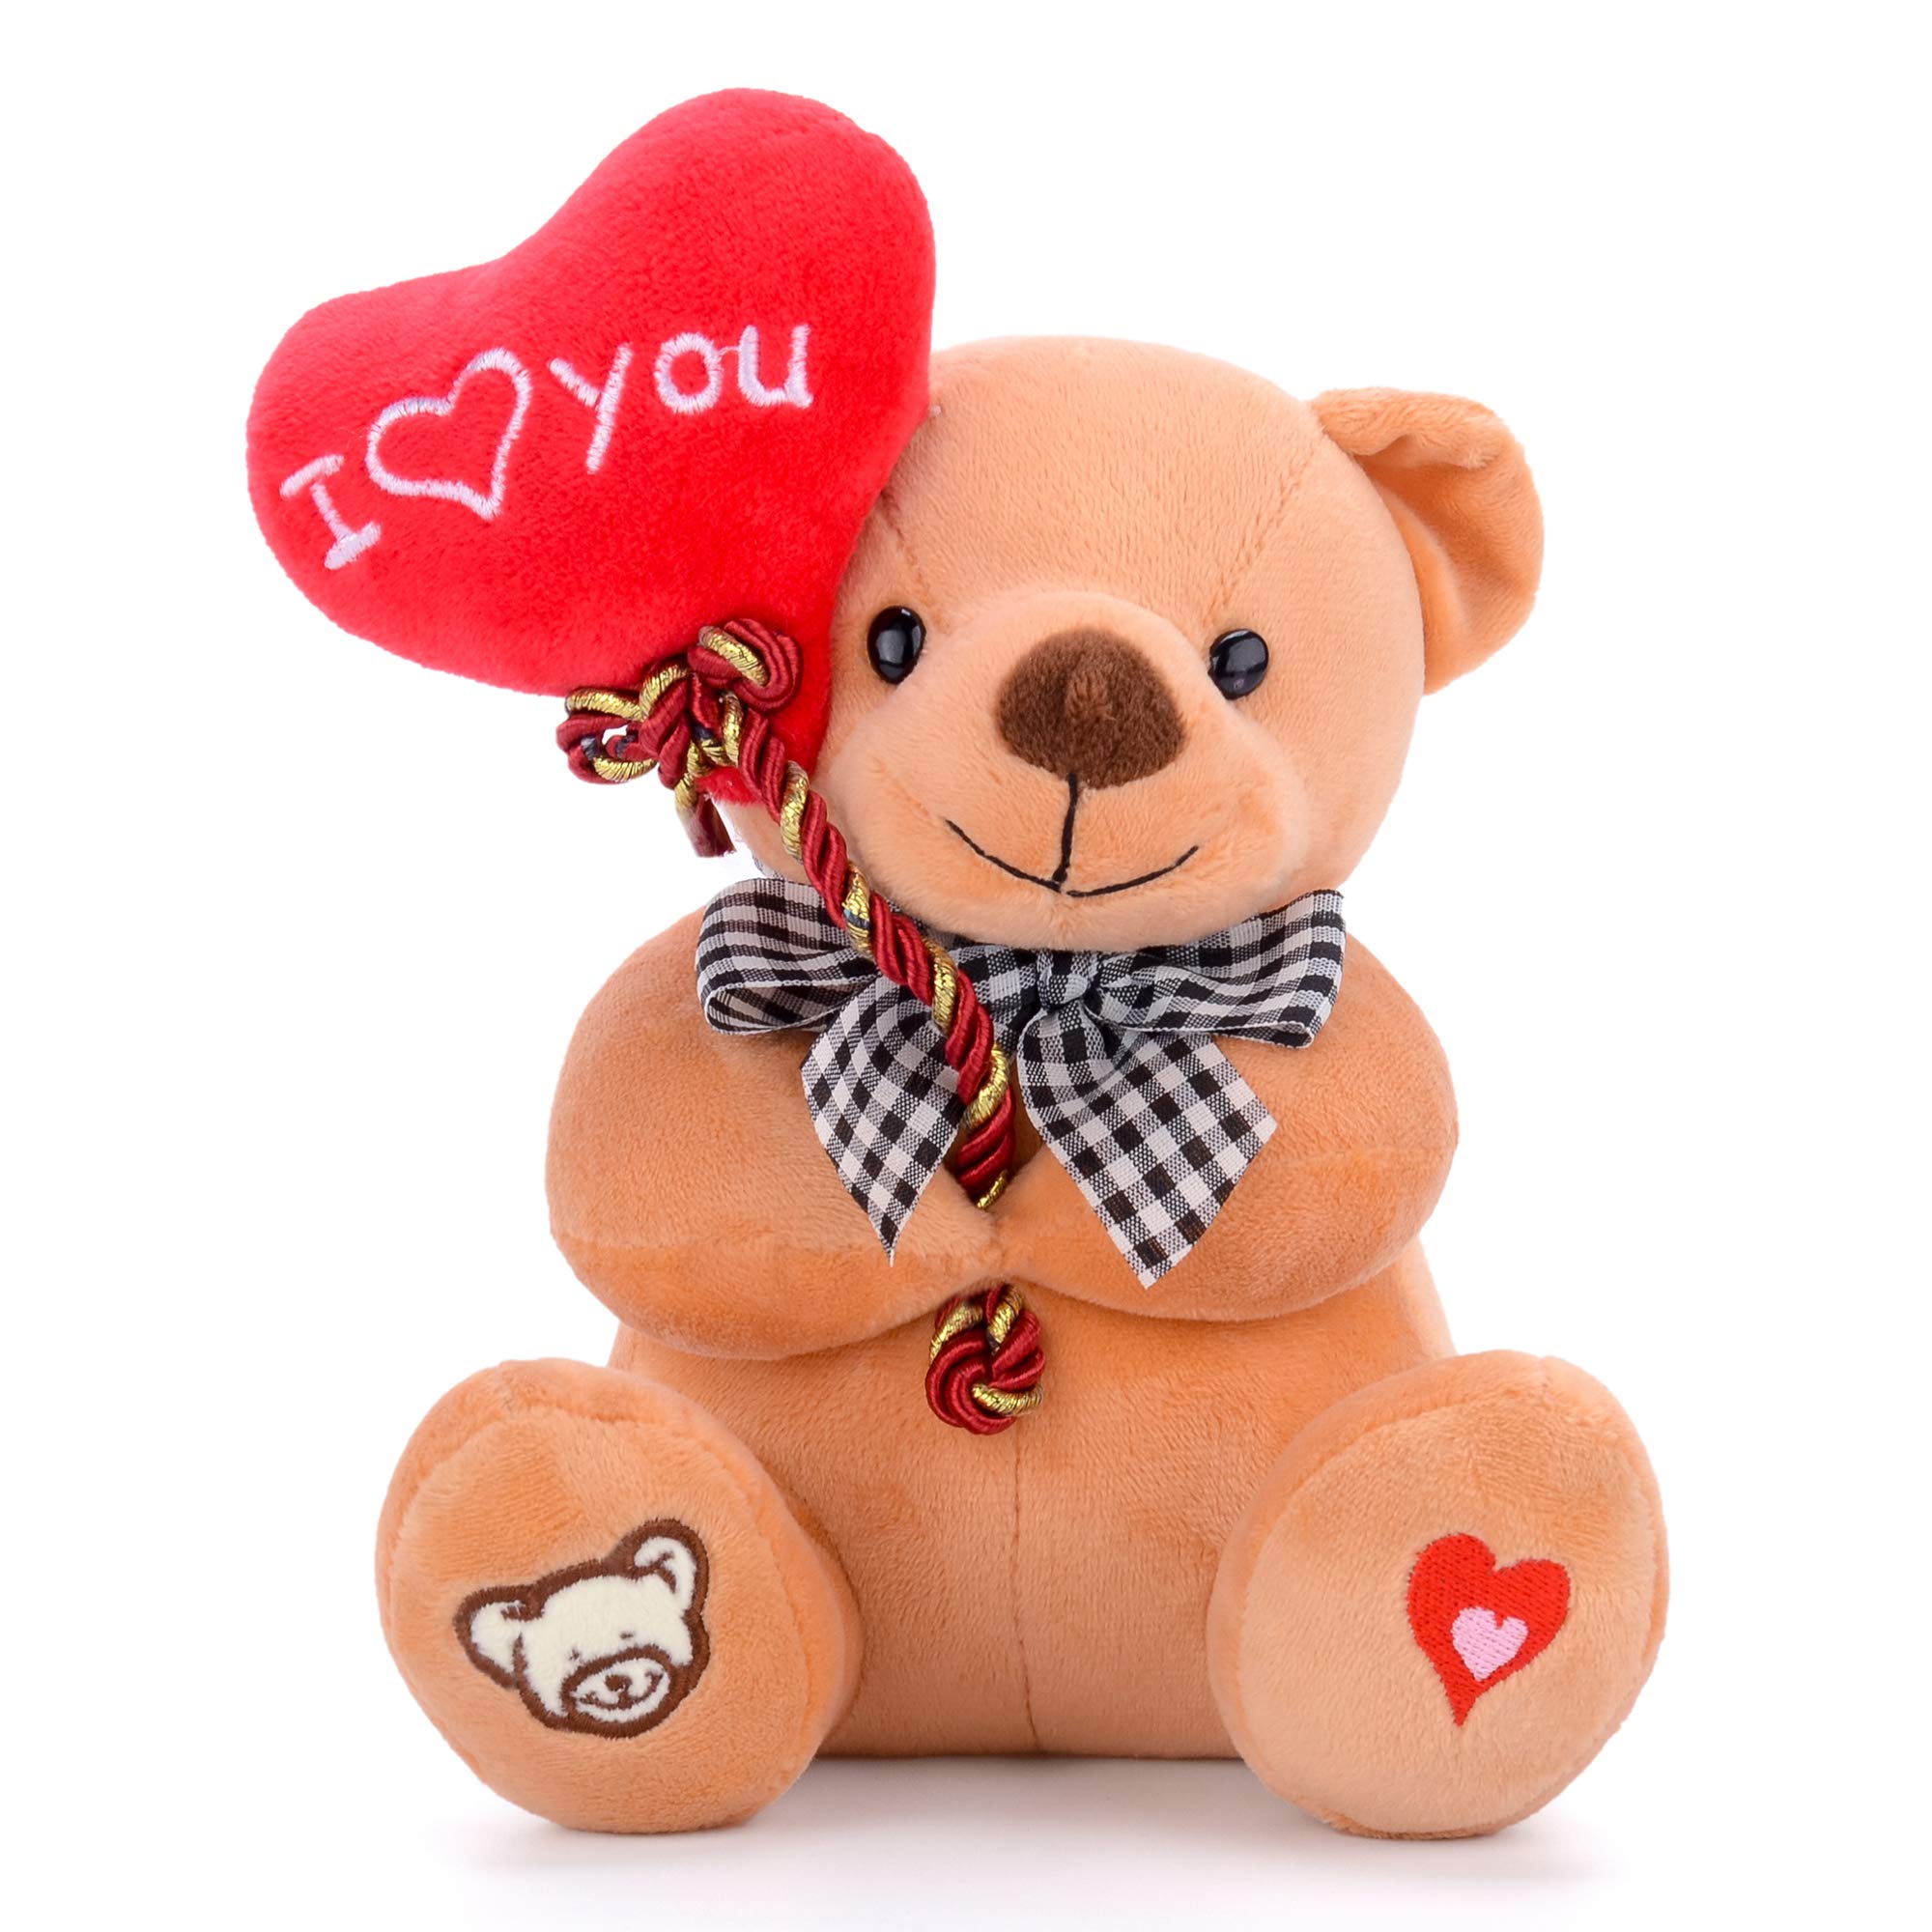 Gloveleya Valentine's Teddy Bear